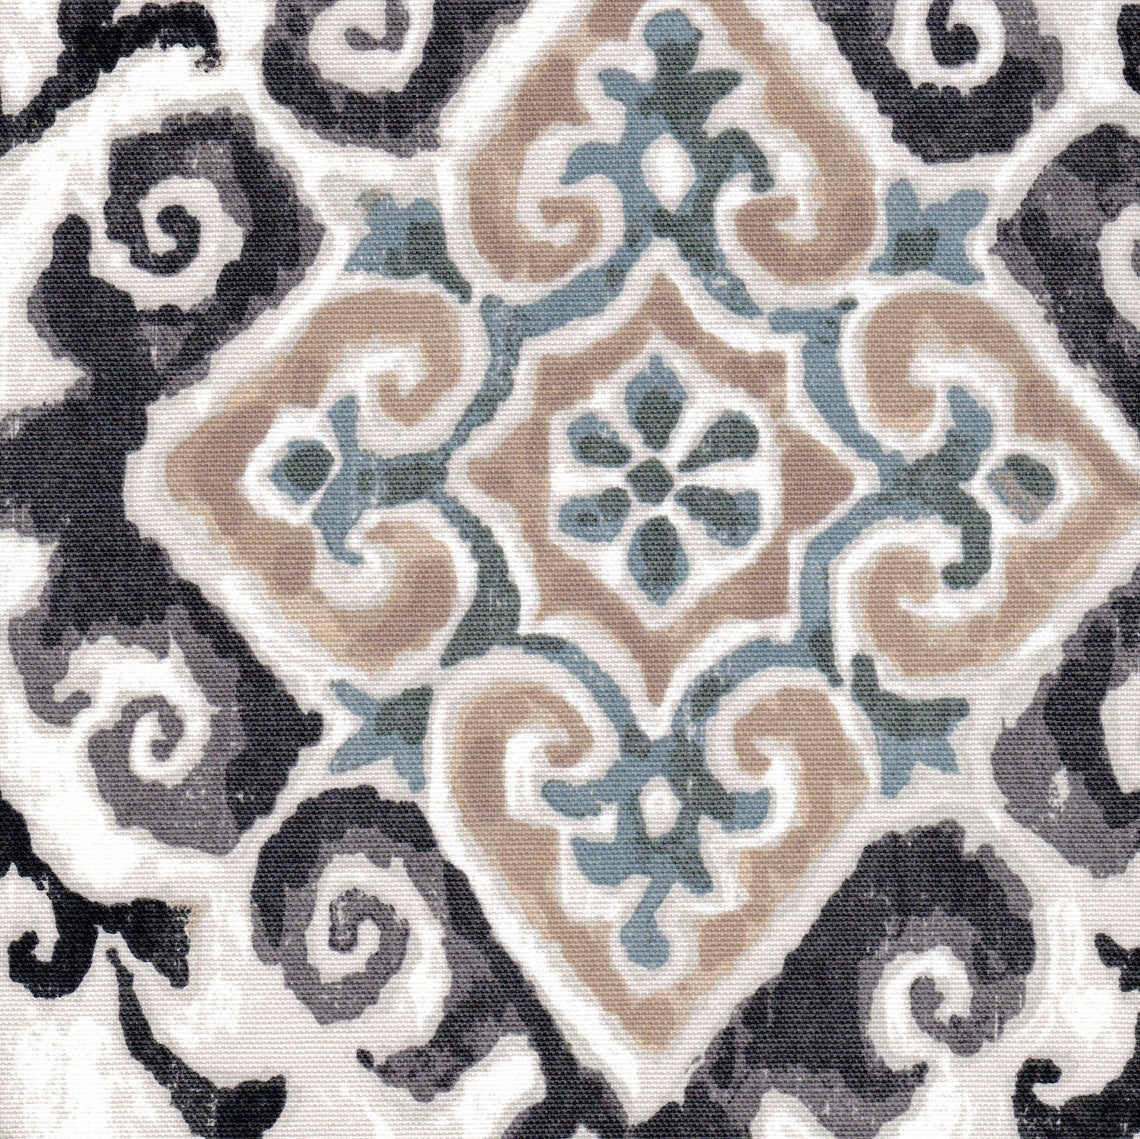 rod pocket curtain panels pair in feabhra slate gray diamond medallion - blue, tan, large scale